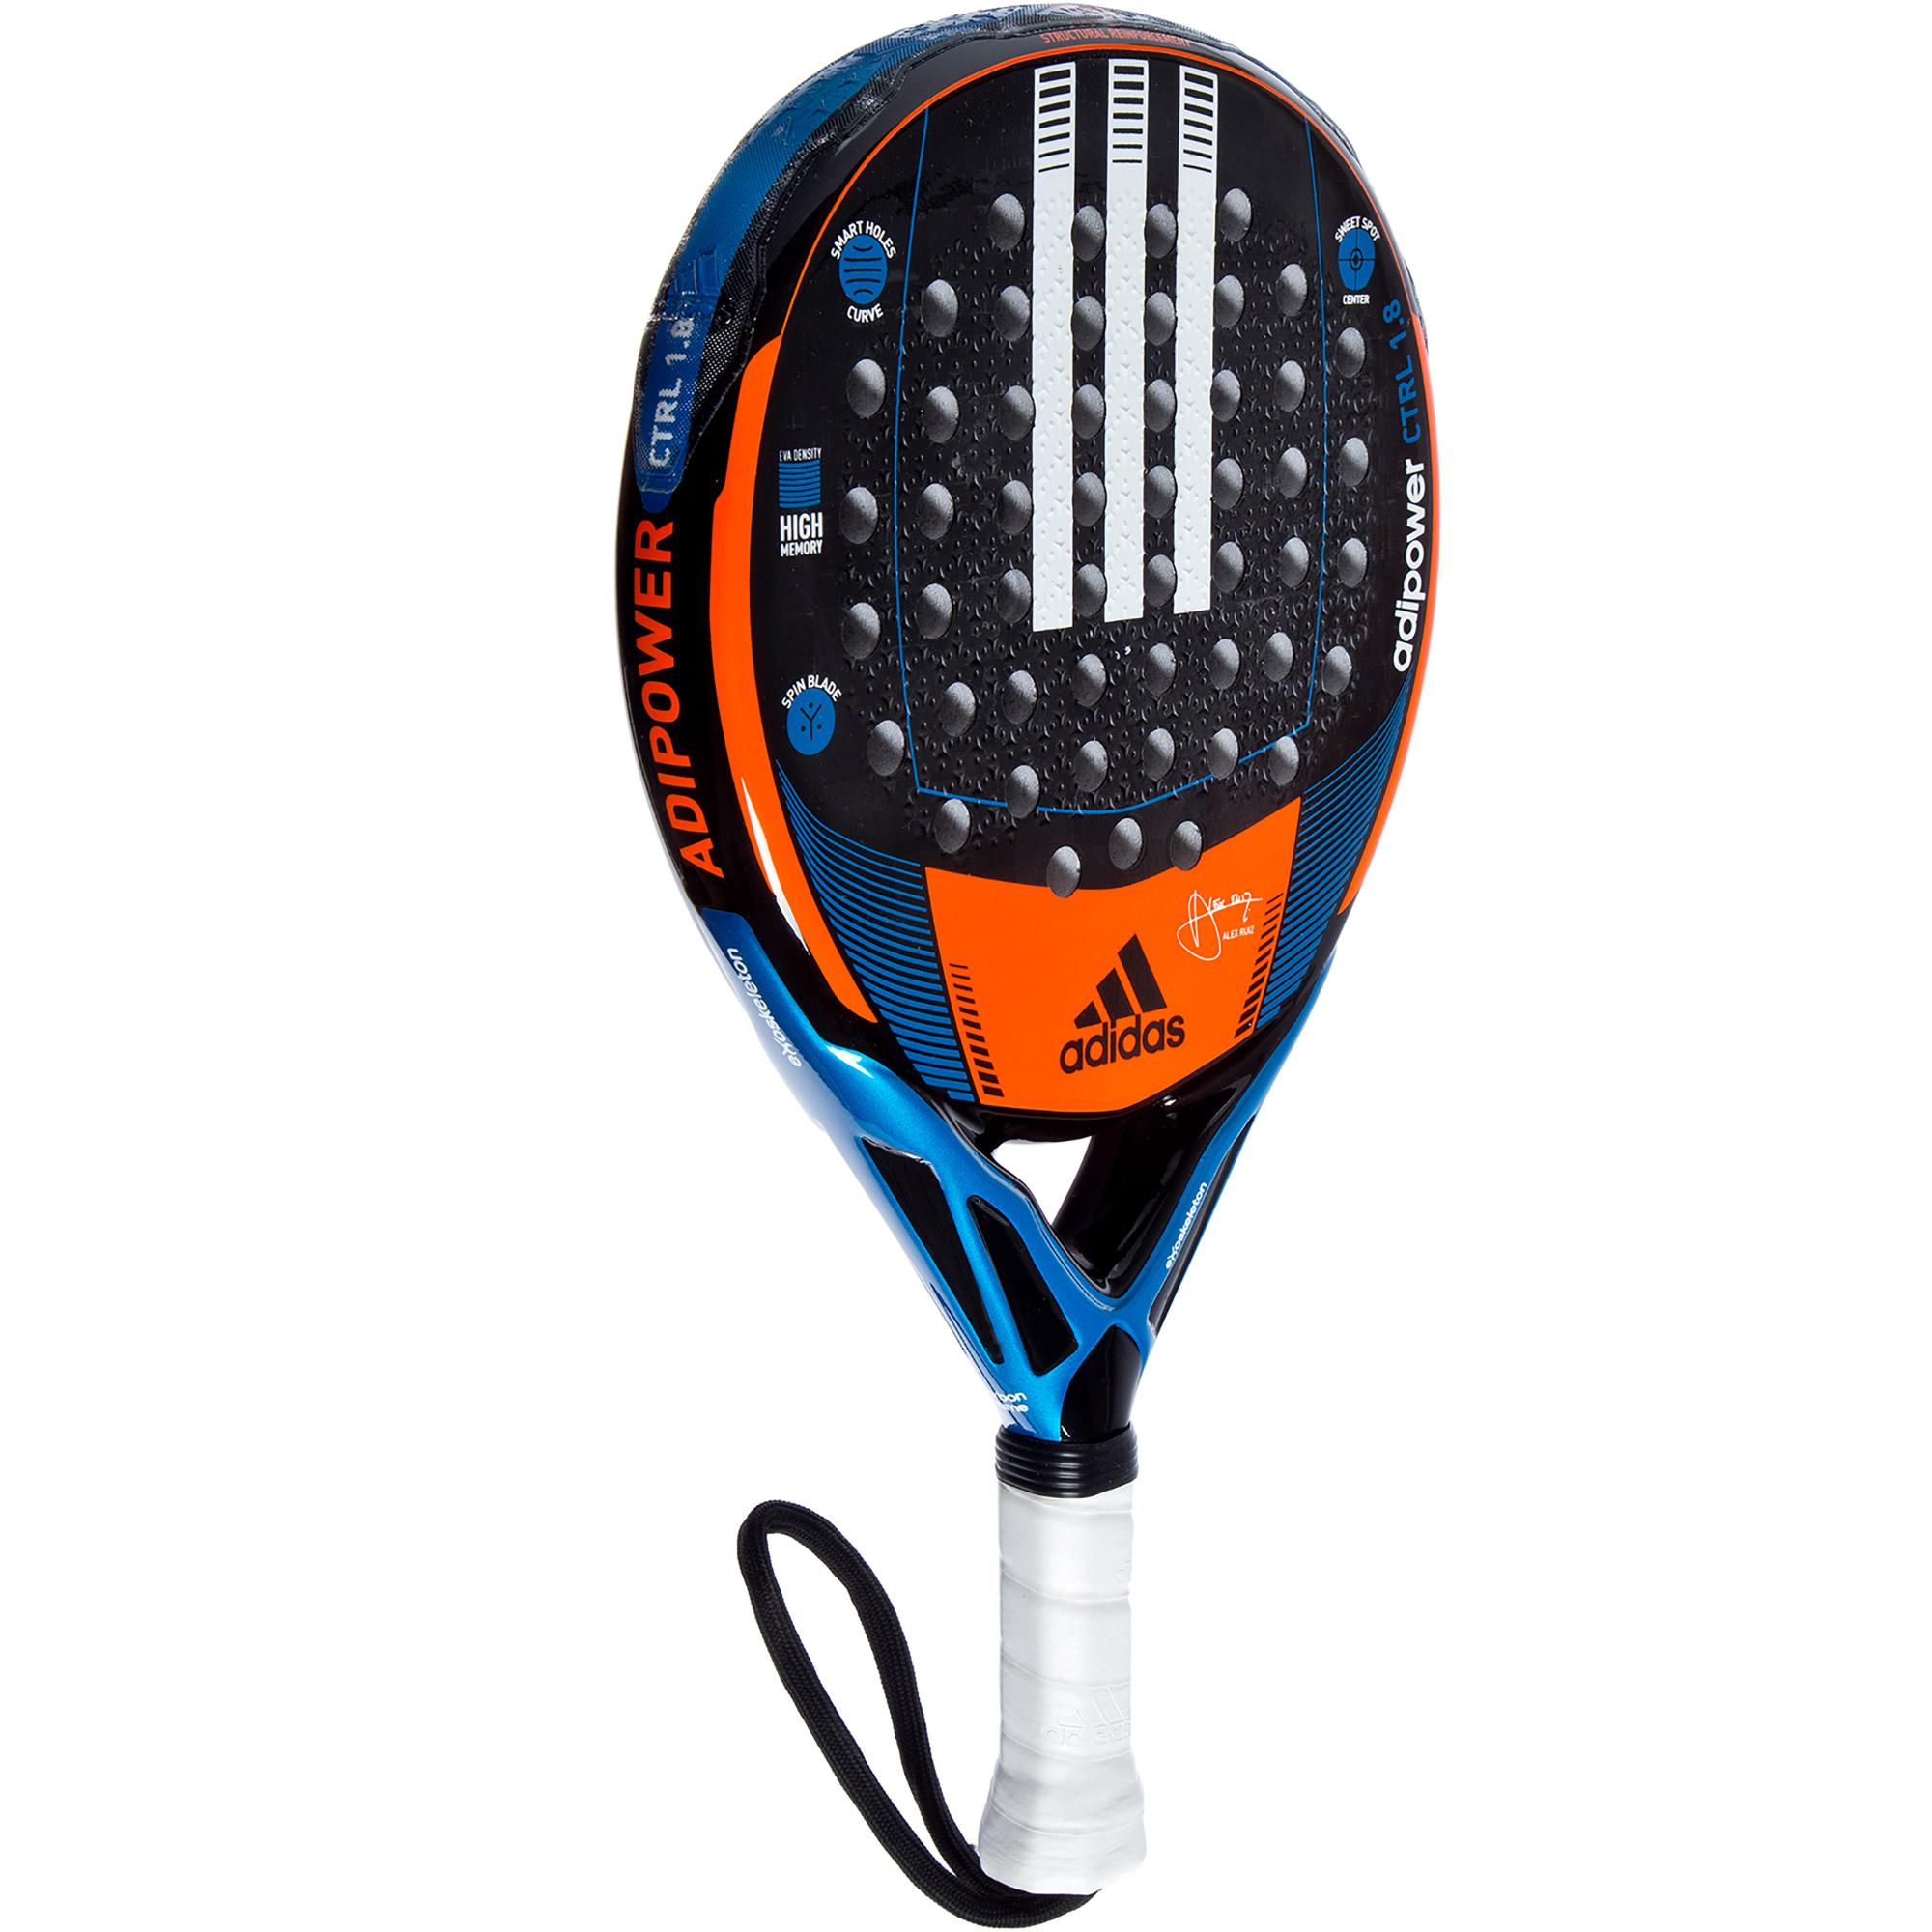 Adidas Adipower 1.8 Control Padel Racket - Tennisnuts.com